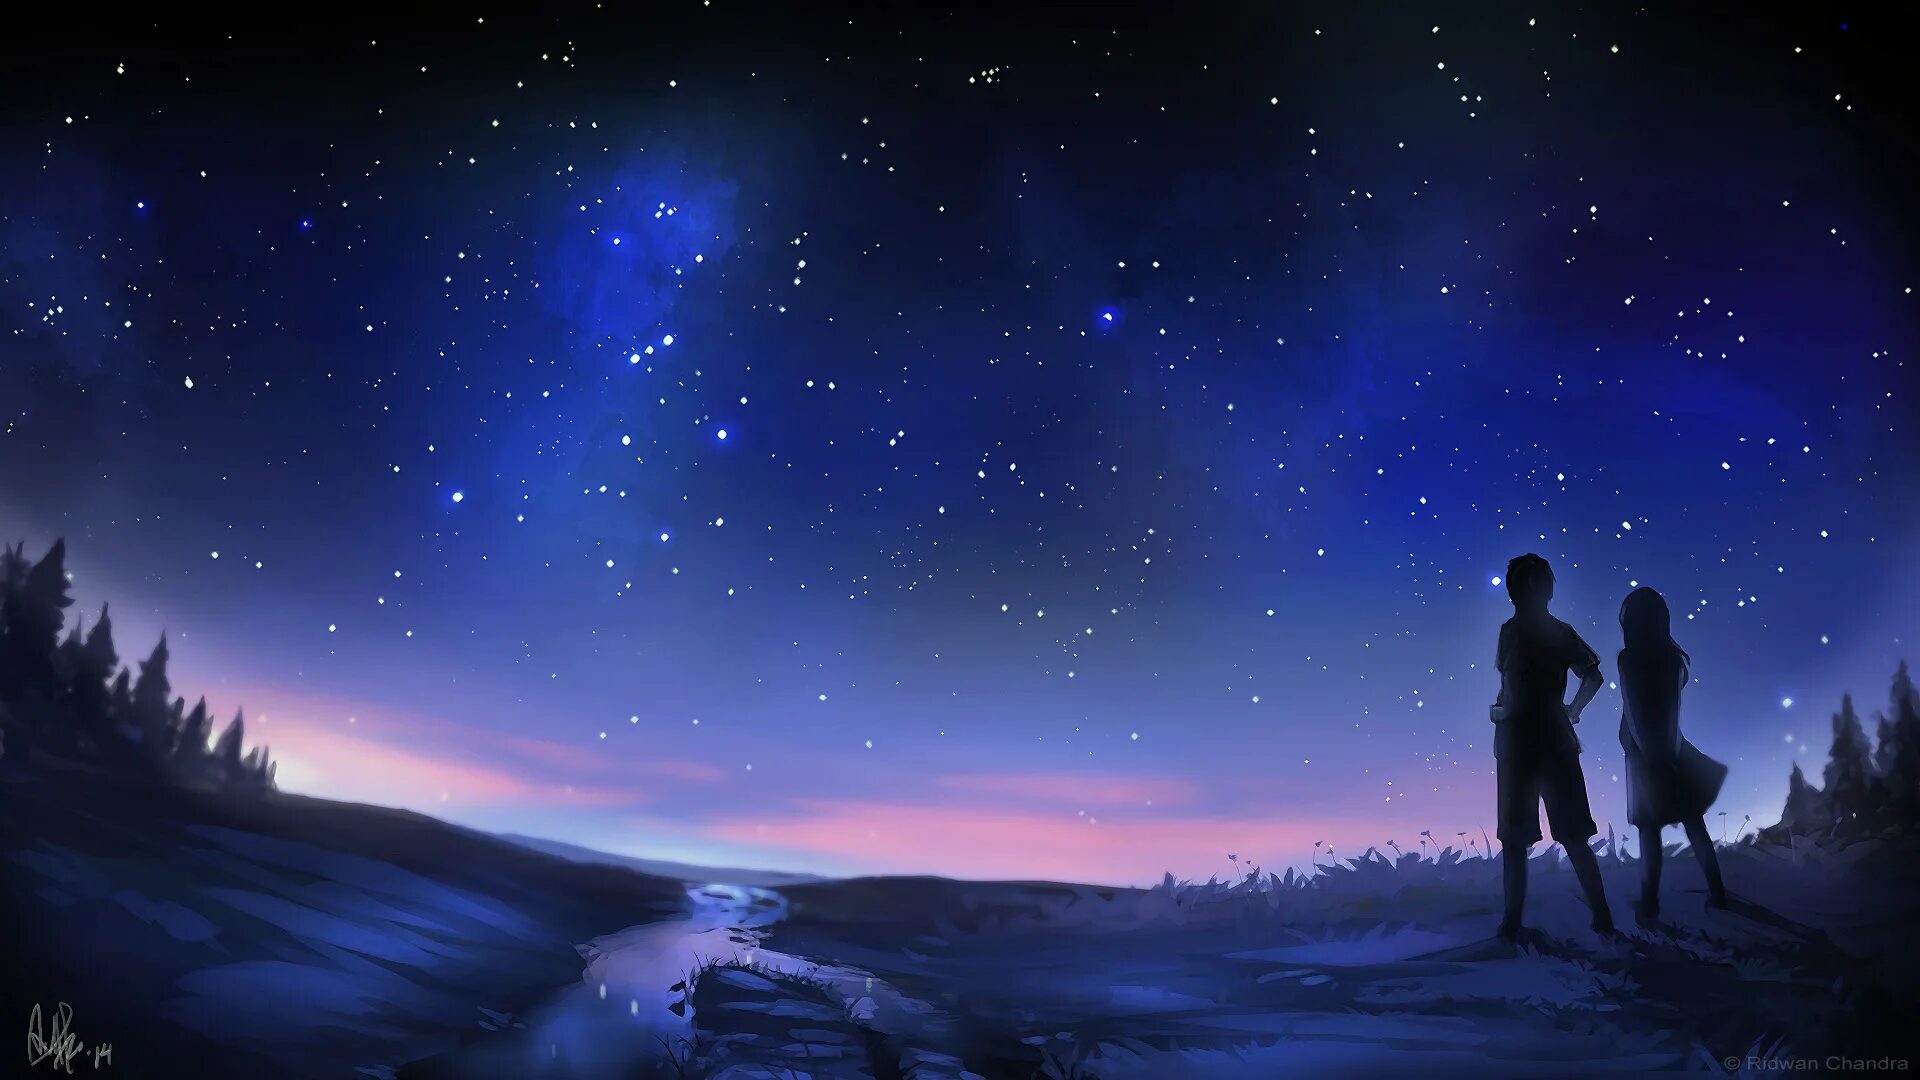 Звездное небо арт. Ночное небо со звездами. Звездное небо фон. Девушка и звездное небо. Ария смотрящего на звезды